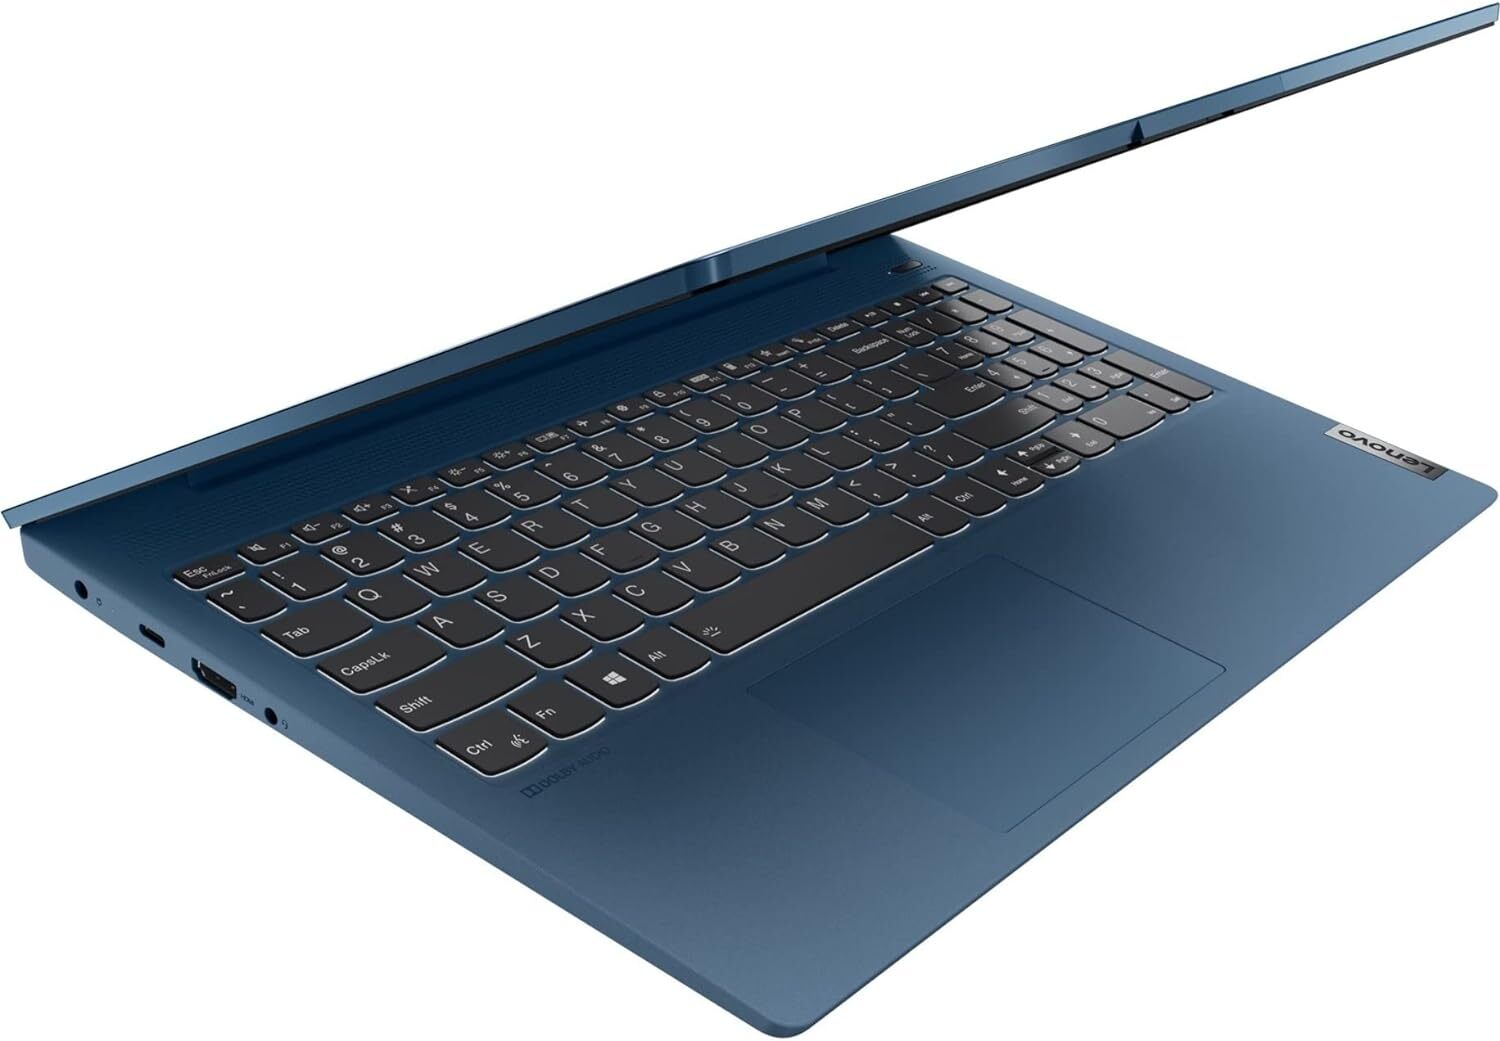  قیمت لپ تاپ IdeaPad 5 i7 1065G7 MX350 | لاکچری لپ تاپ 